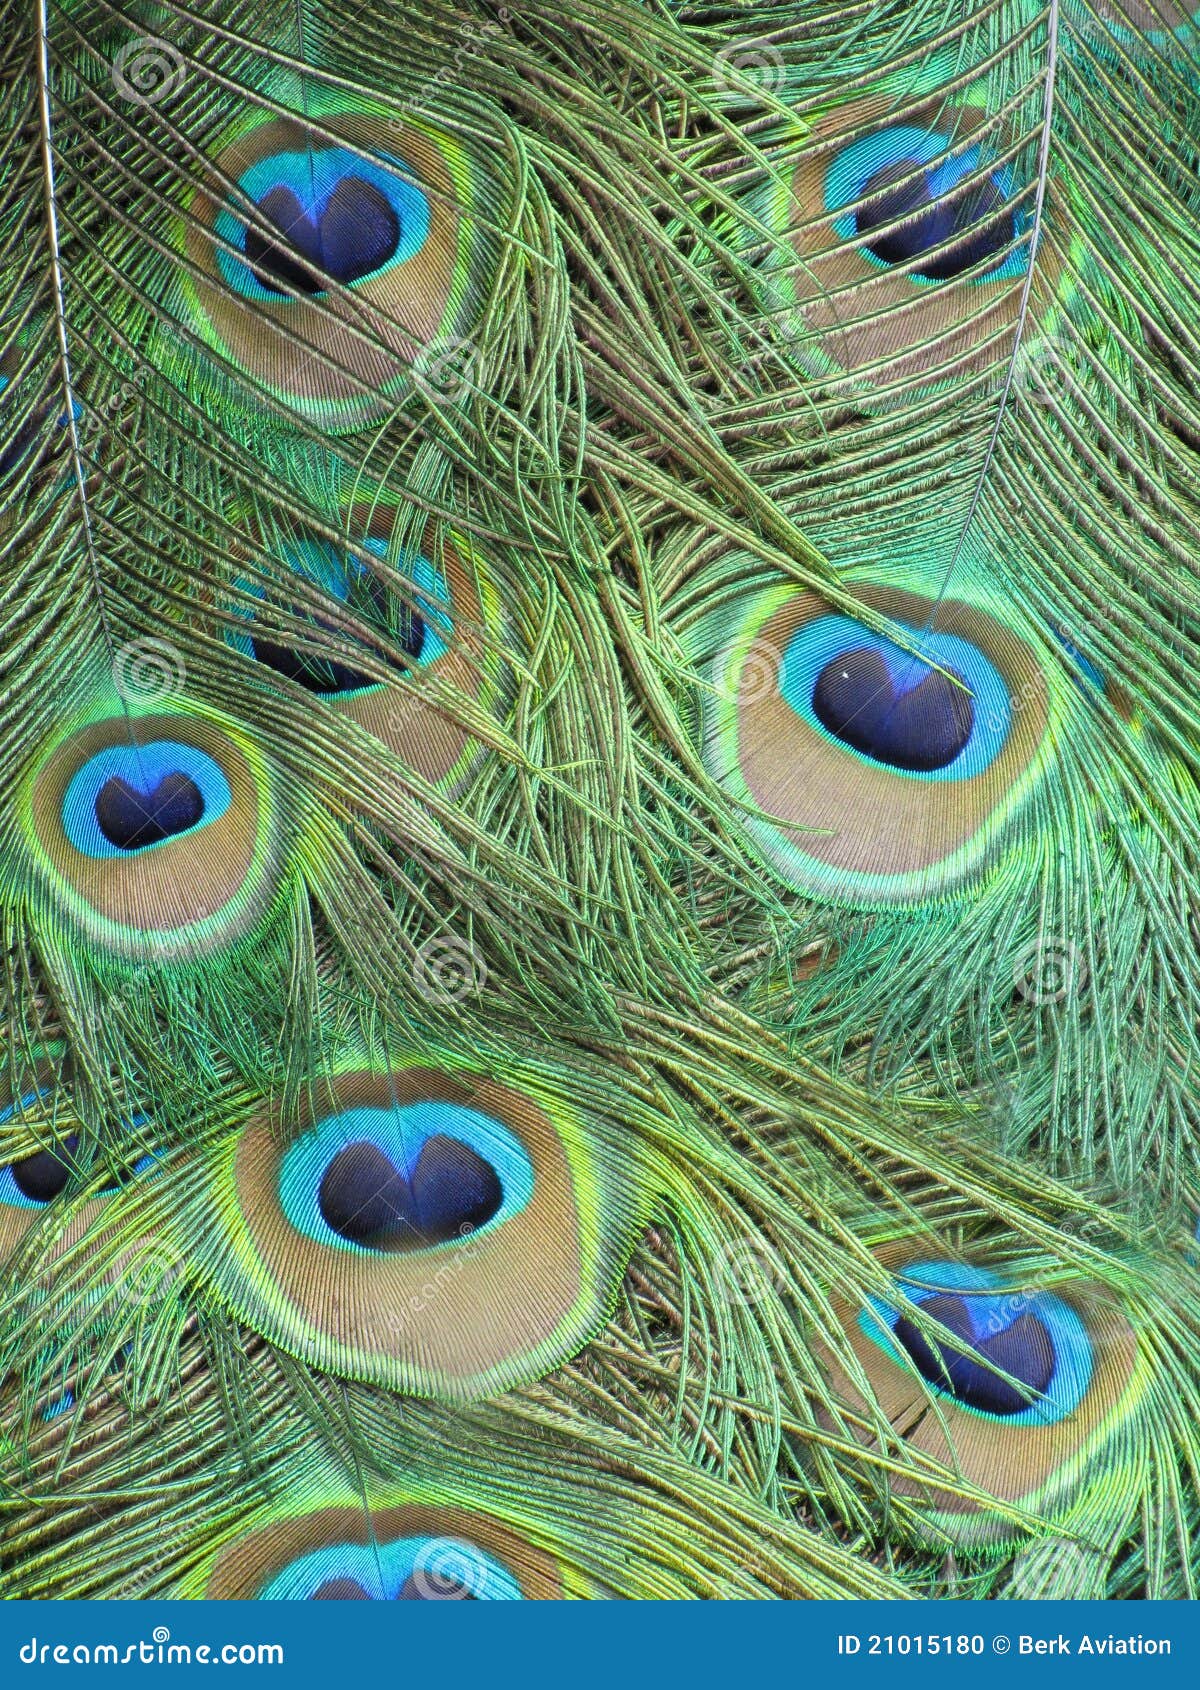 Peacock tail stock photo. Image of bird, decorative, colors - 21015180